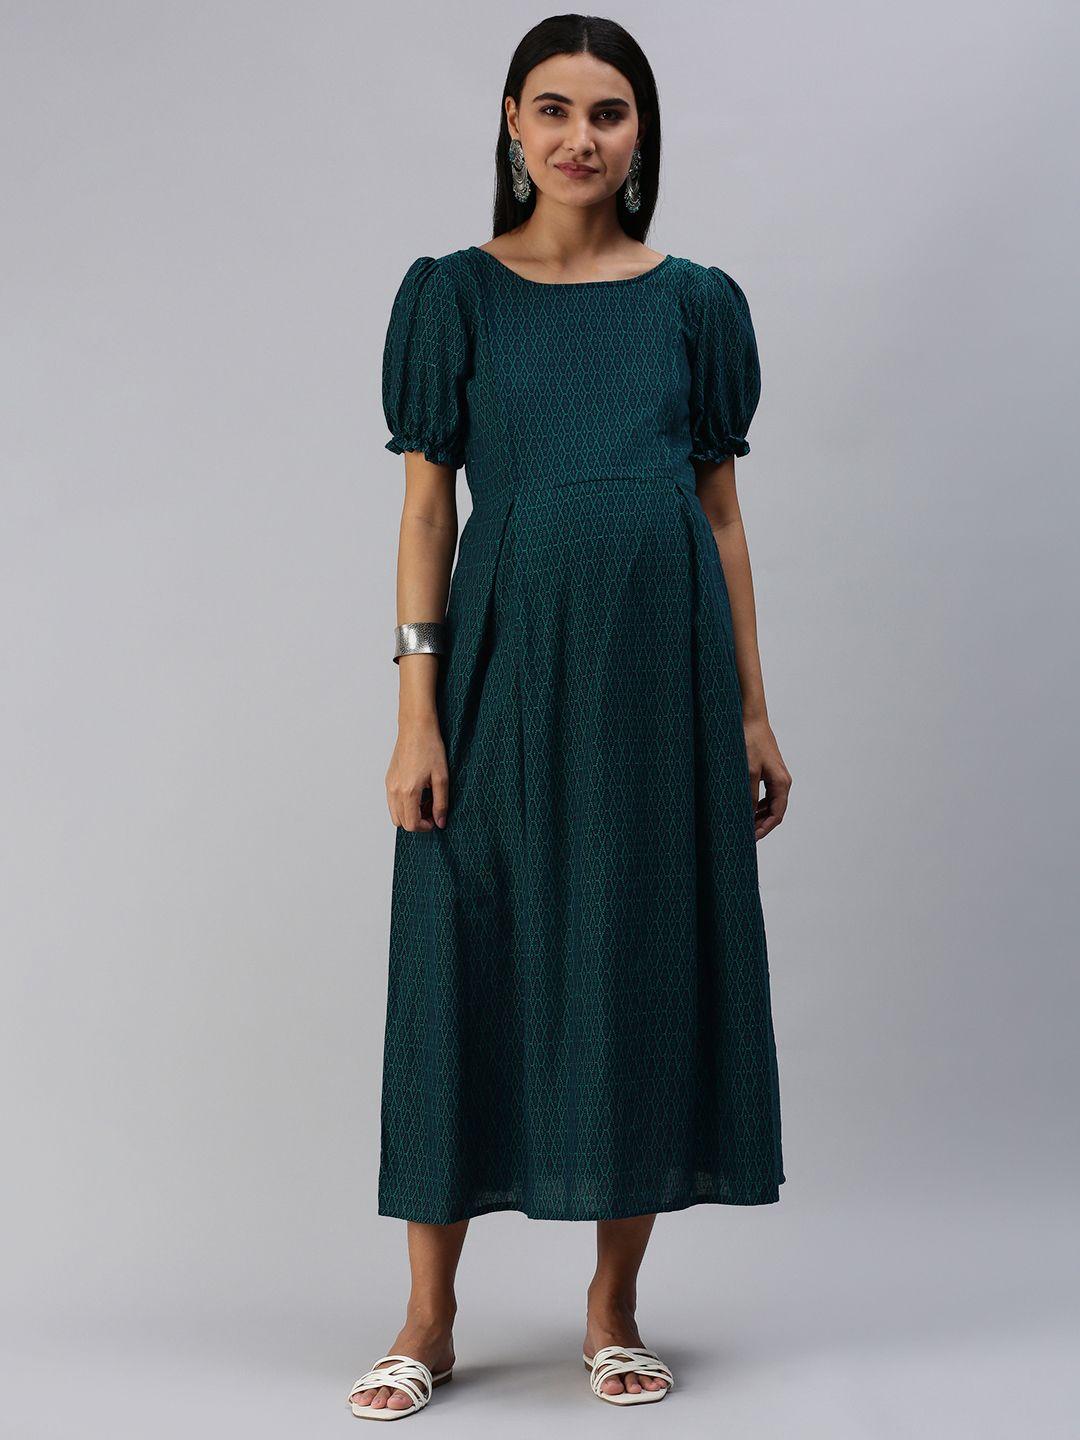 swishchick teal blue & green woven design maternity midi dress